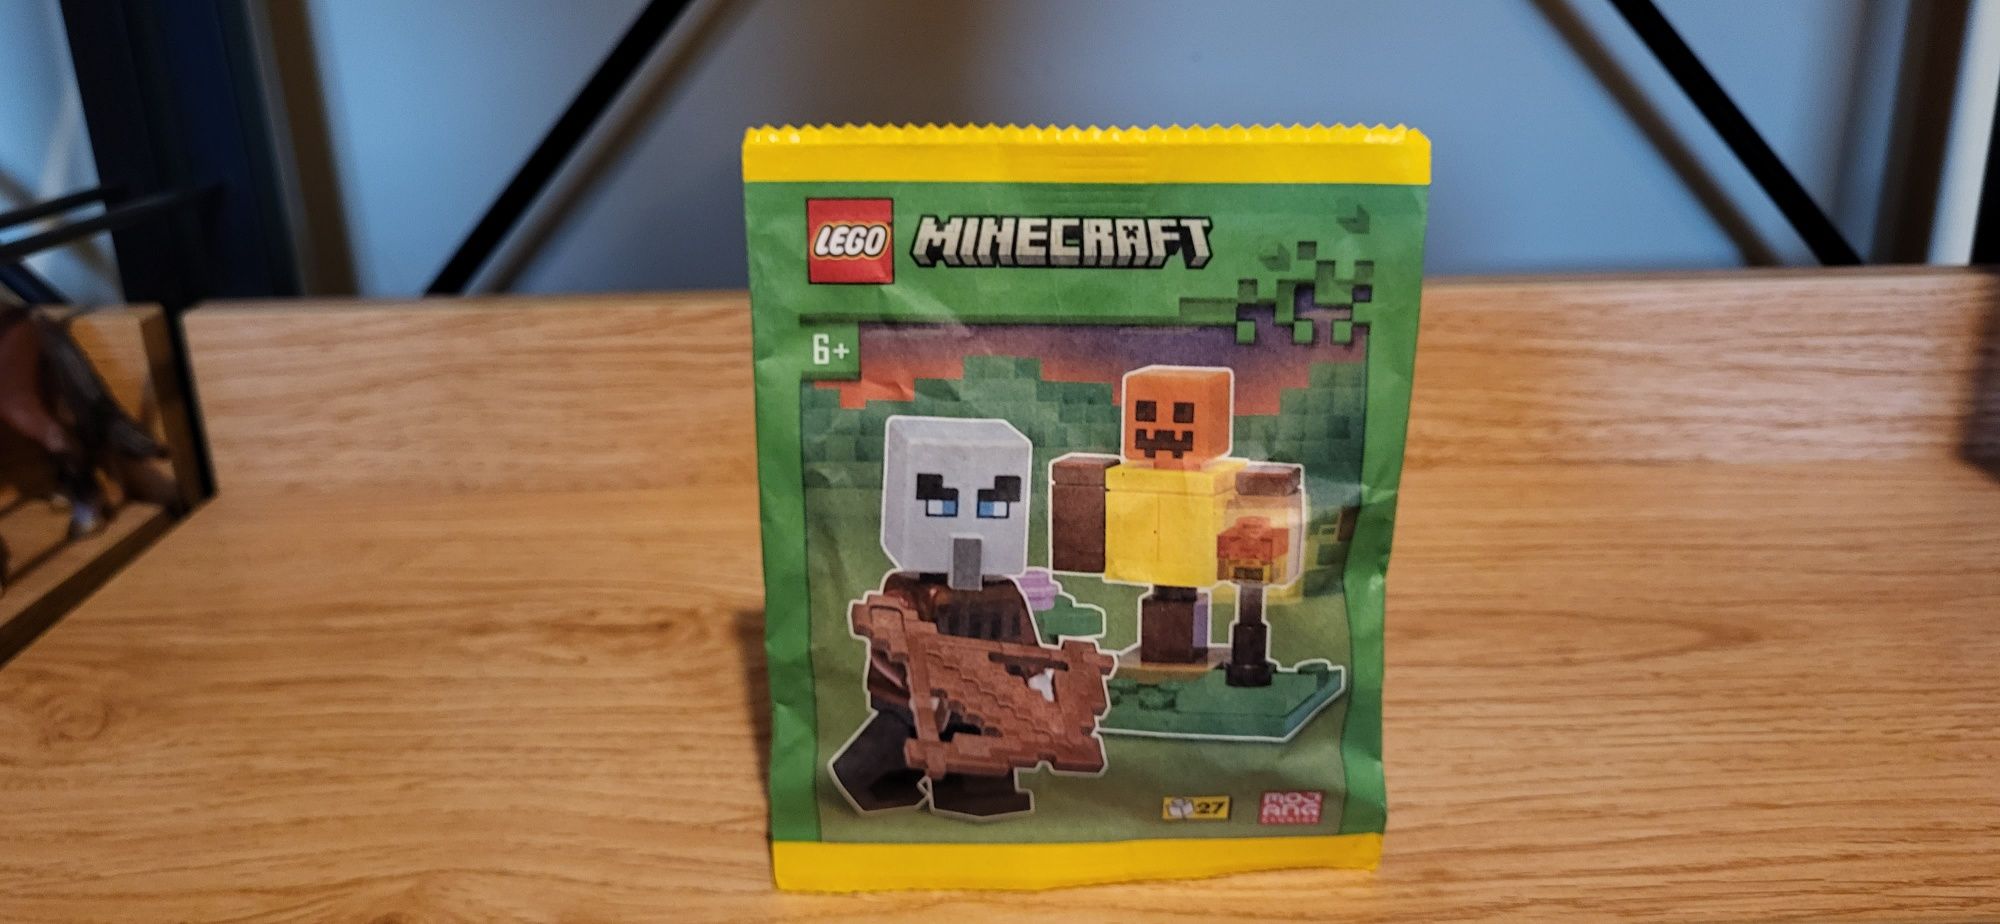 Lego Minecraft 662306 Rozbójnik i manekin trening saszetka z klockami